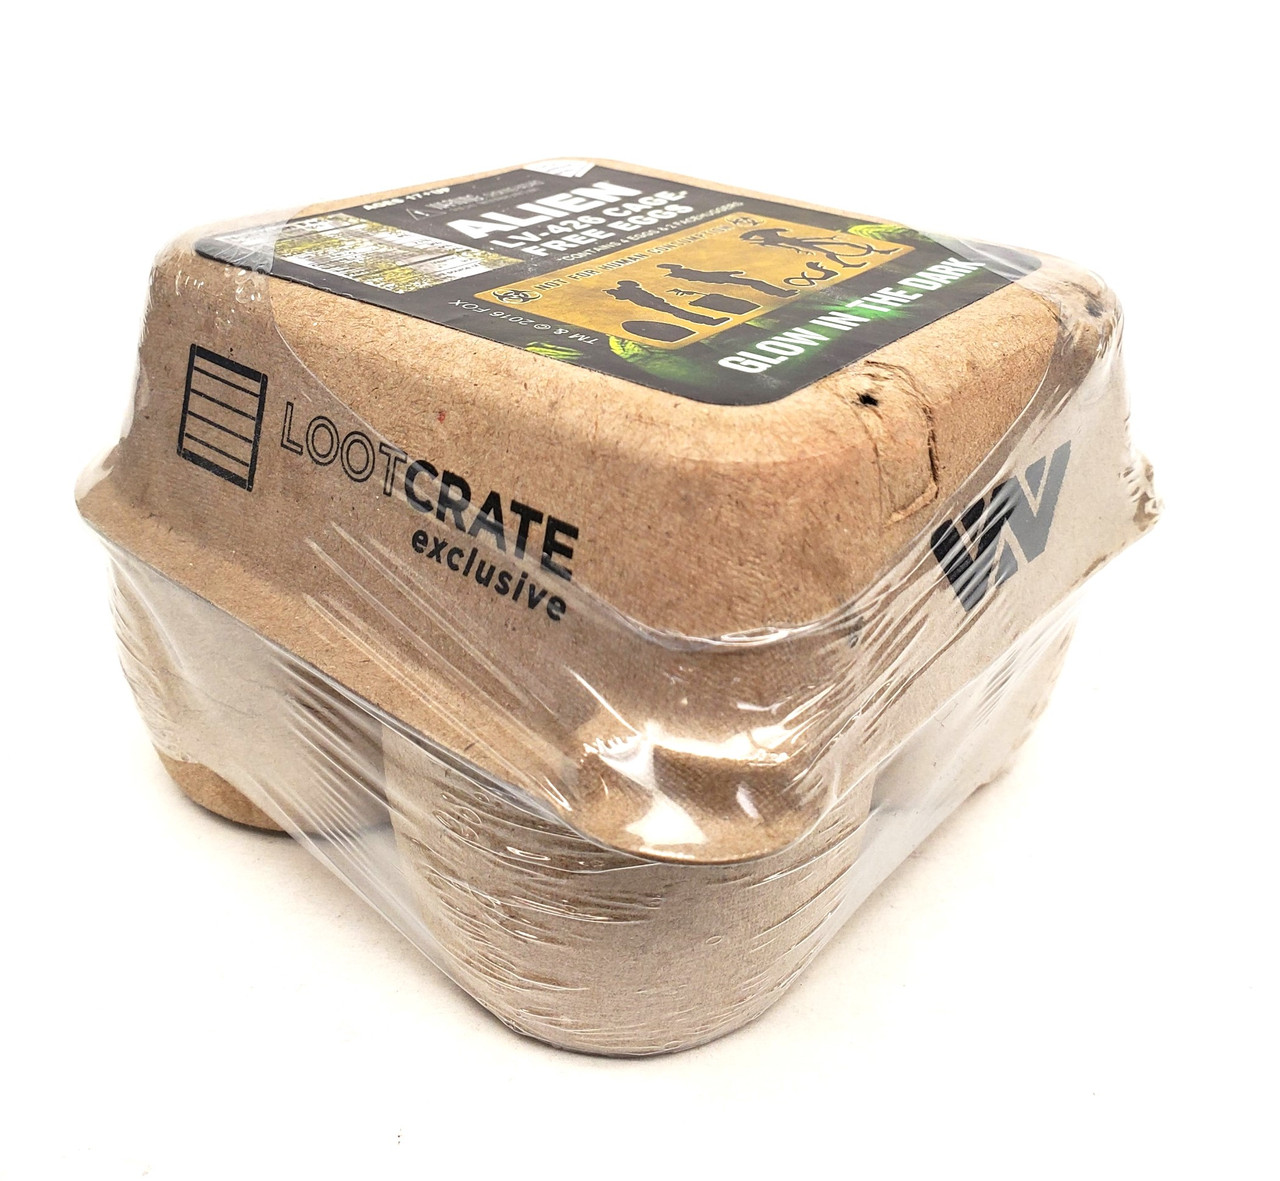 NECA Alien Egg Carton Glow-in-the-Dark Alien Eggs Accessory Pack (4 Pack)  Loot Crate Exclusive